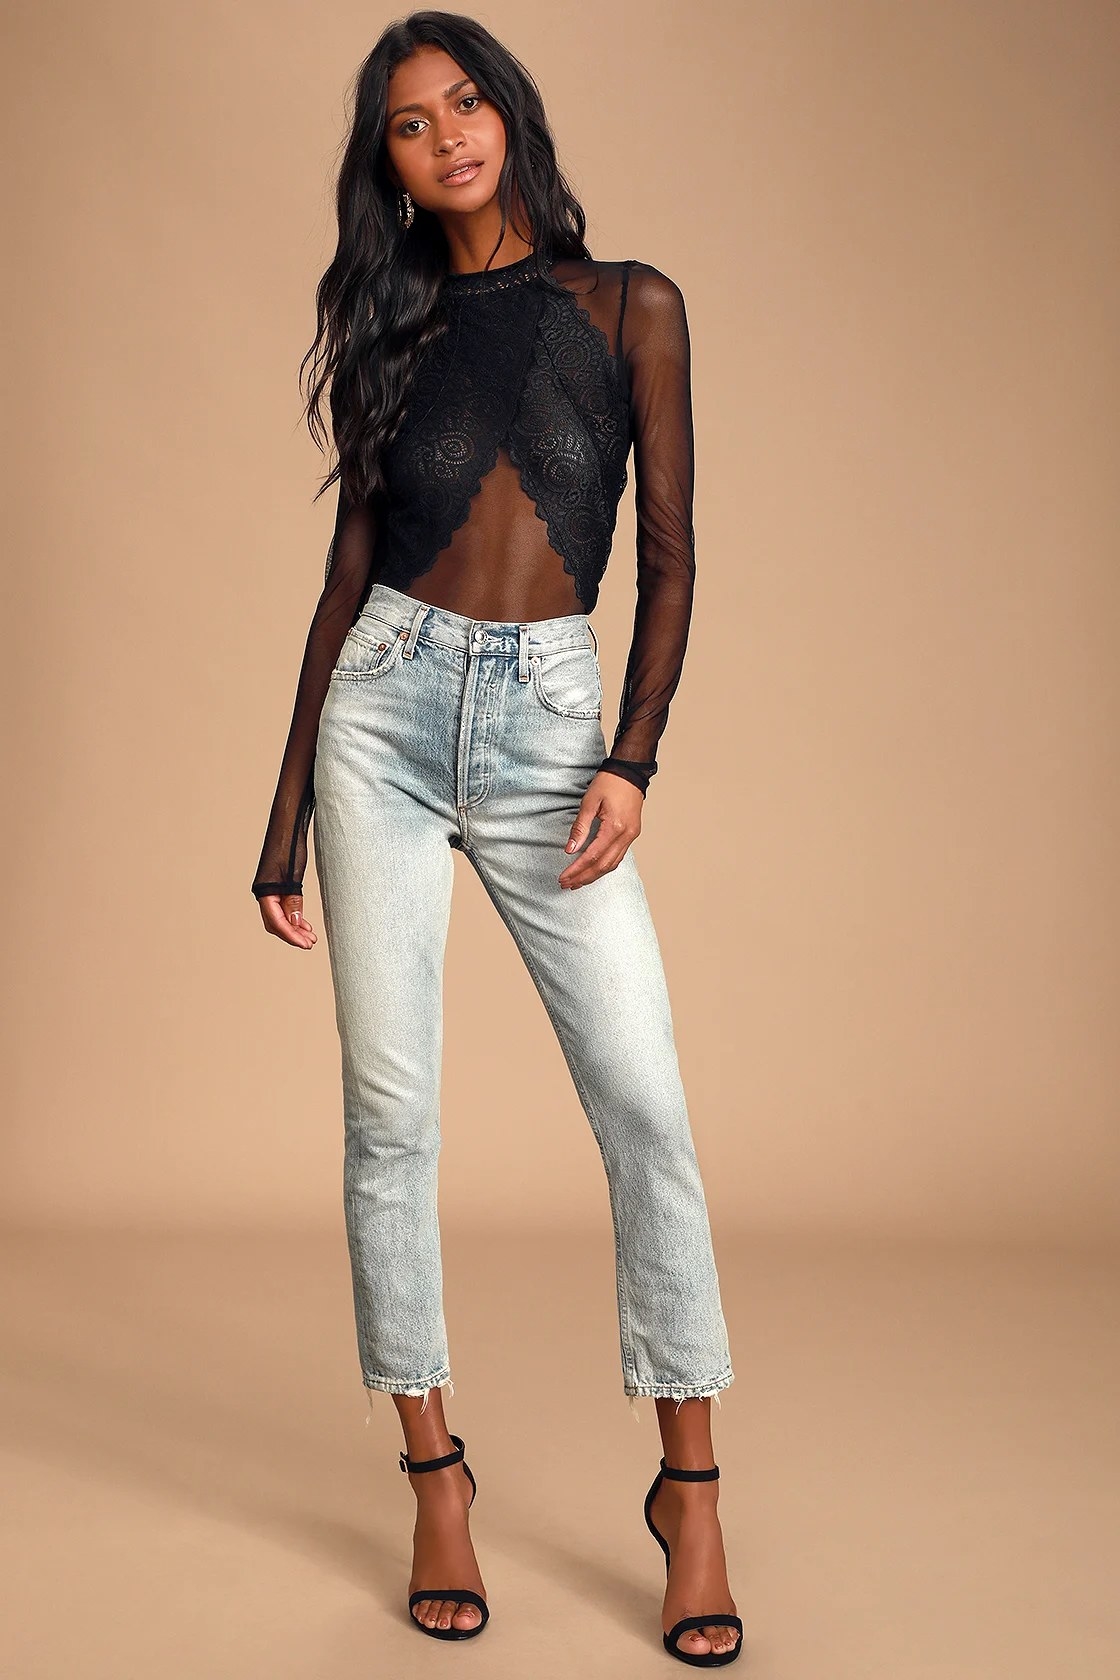 Model wearing bodysuit with jeans